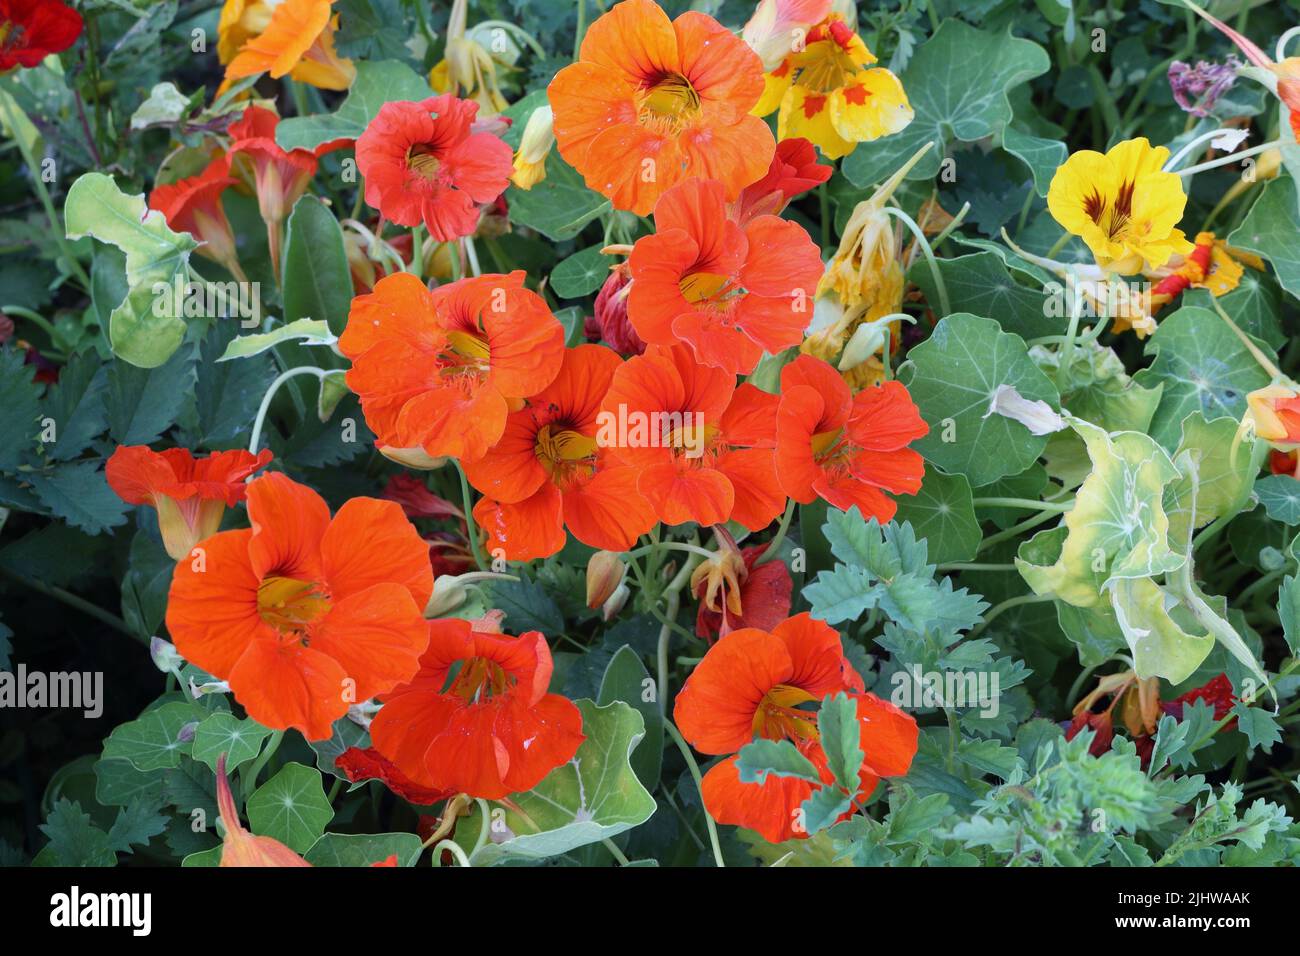 Orange Nasturtium flowers with variagated leaves Stock Photo